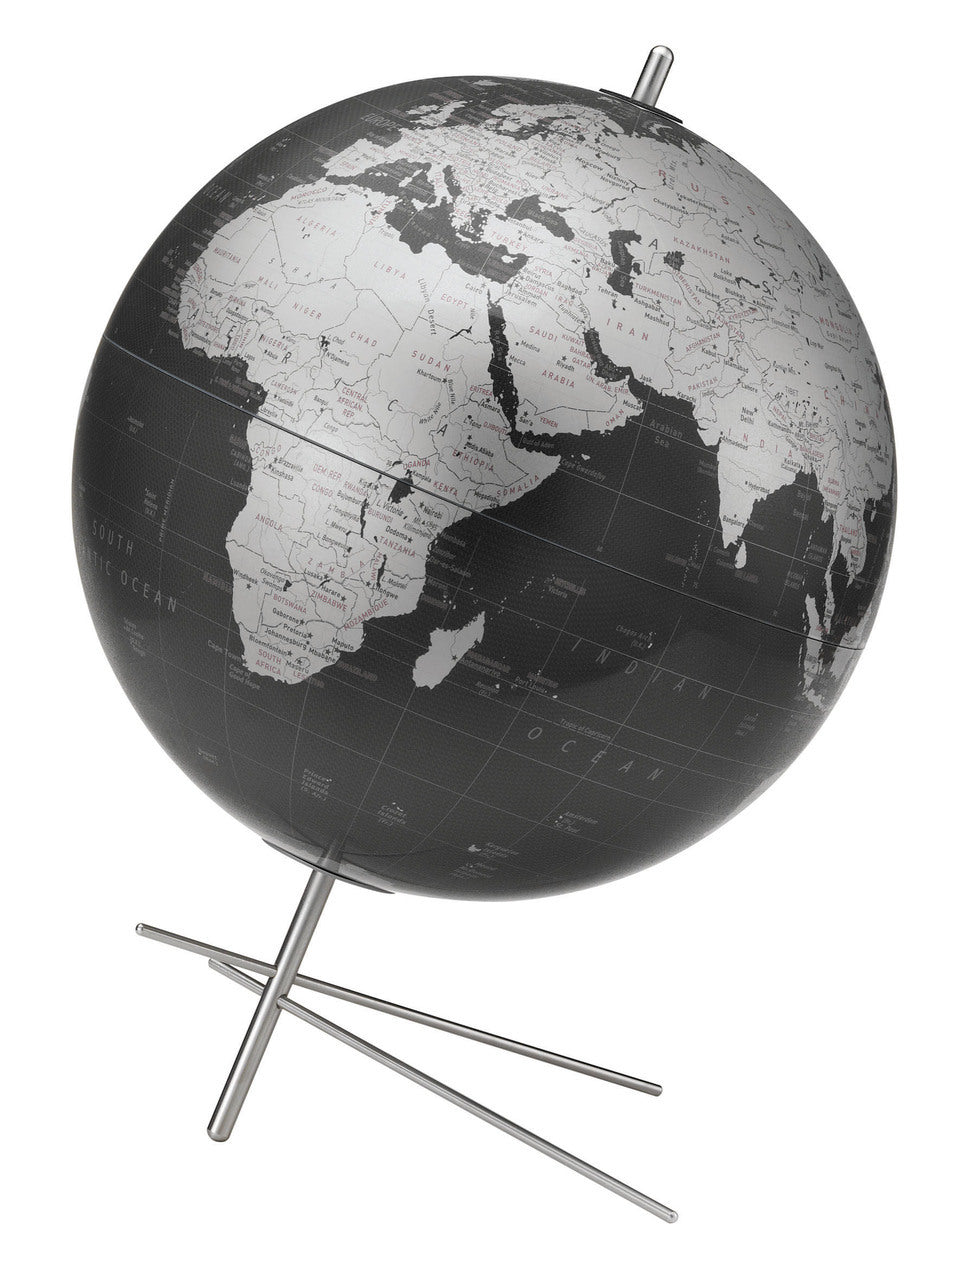 Mikado 12 Inch Desktop World Globe By Replogle Globes